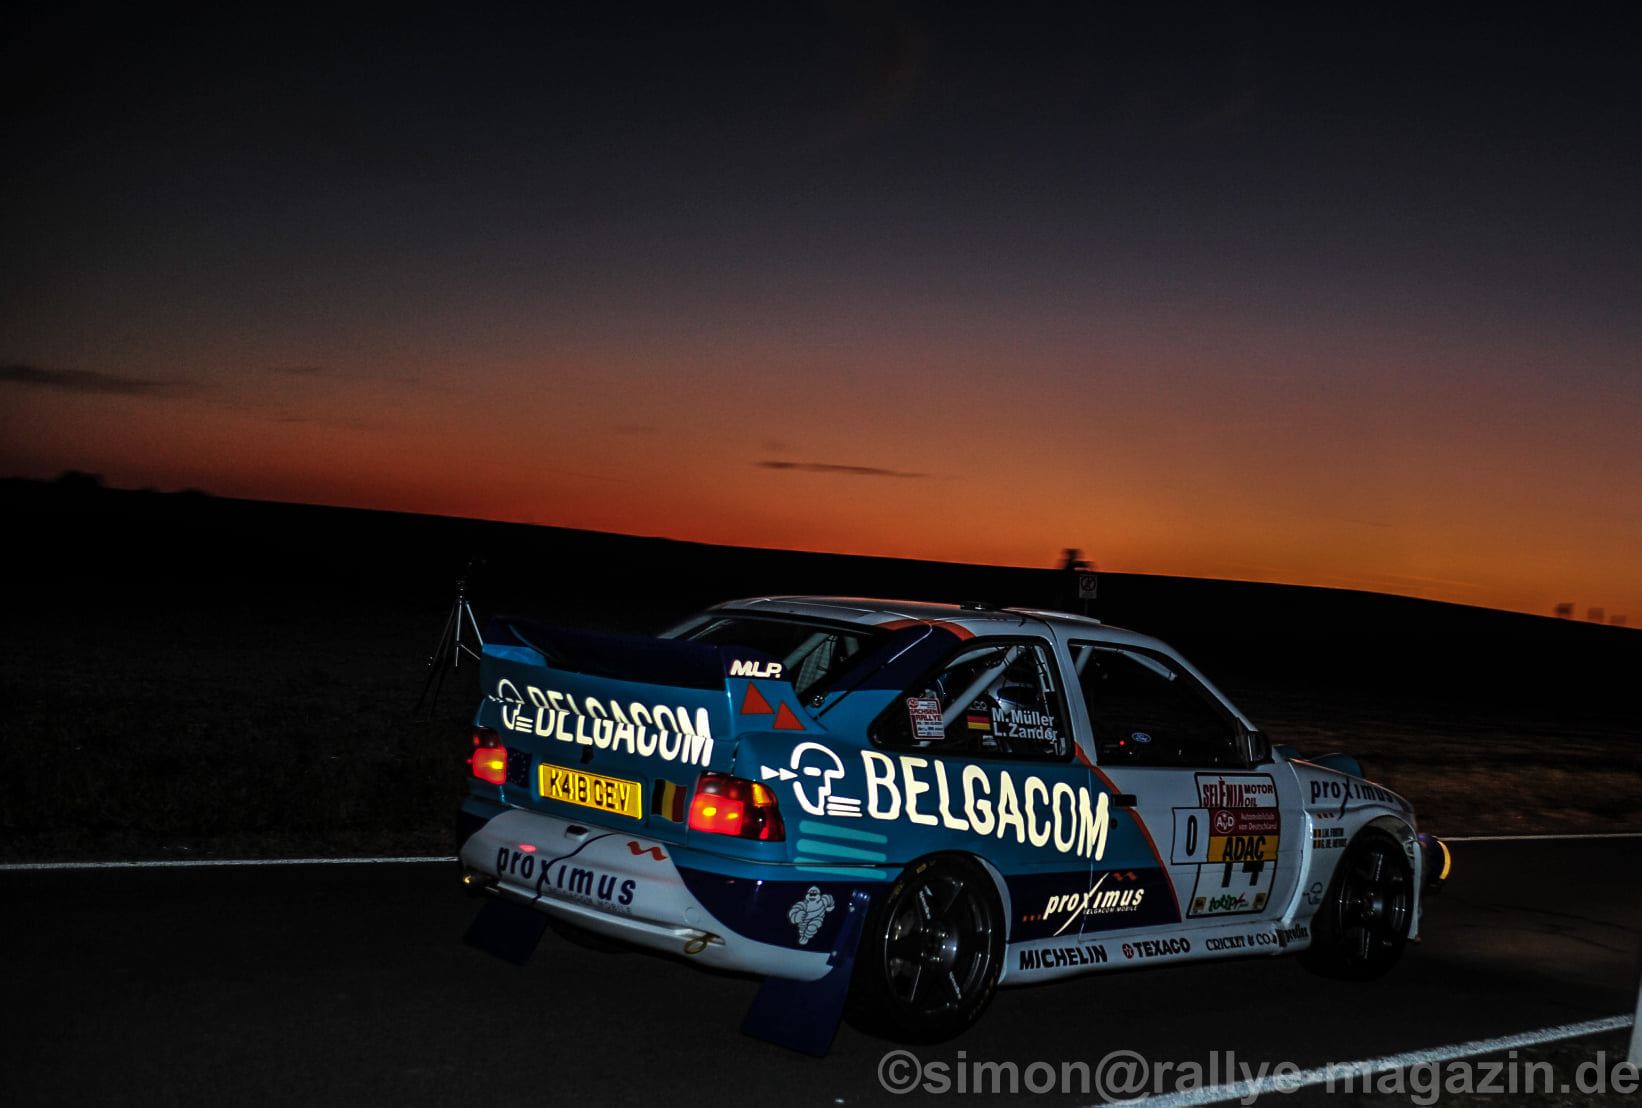 Ford Escort Cosworth WRC Belgacom